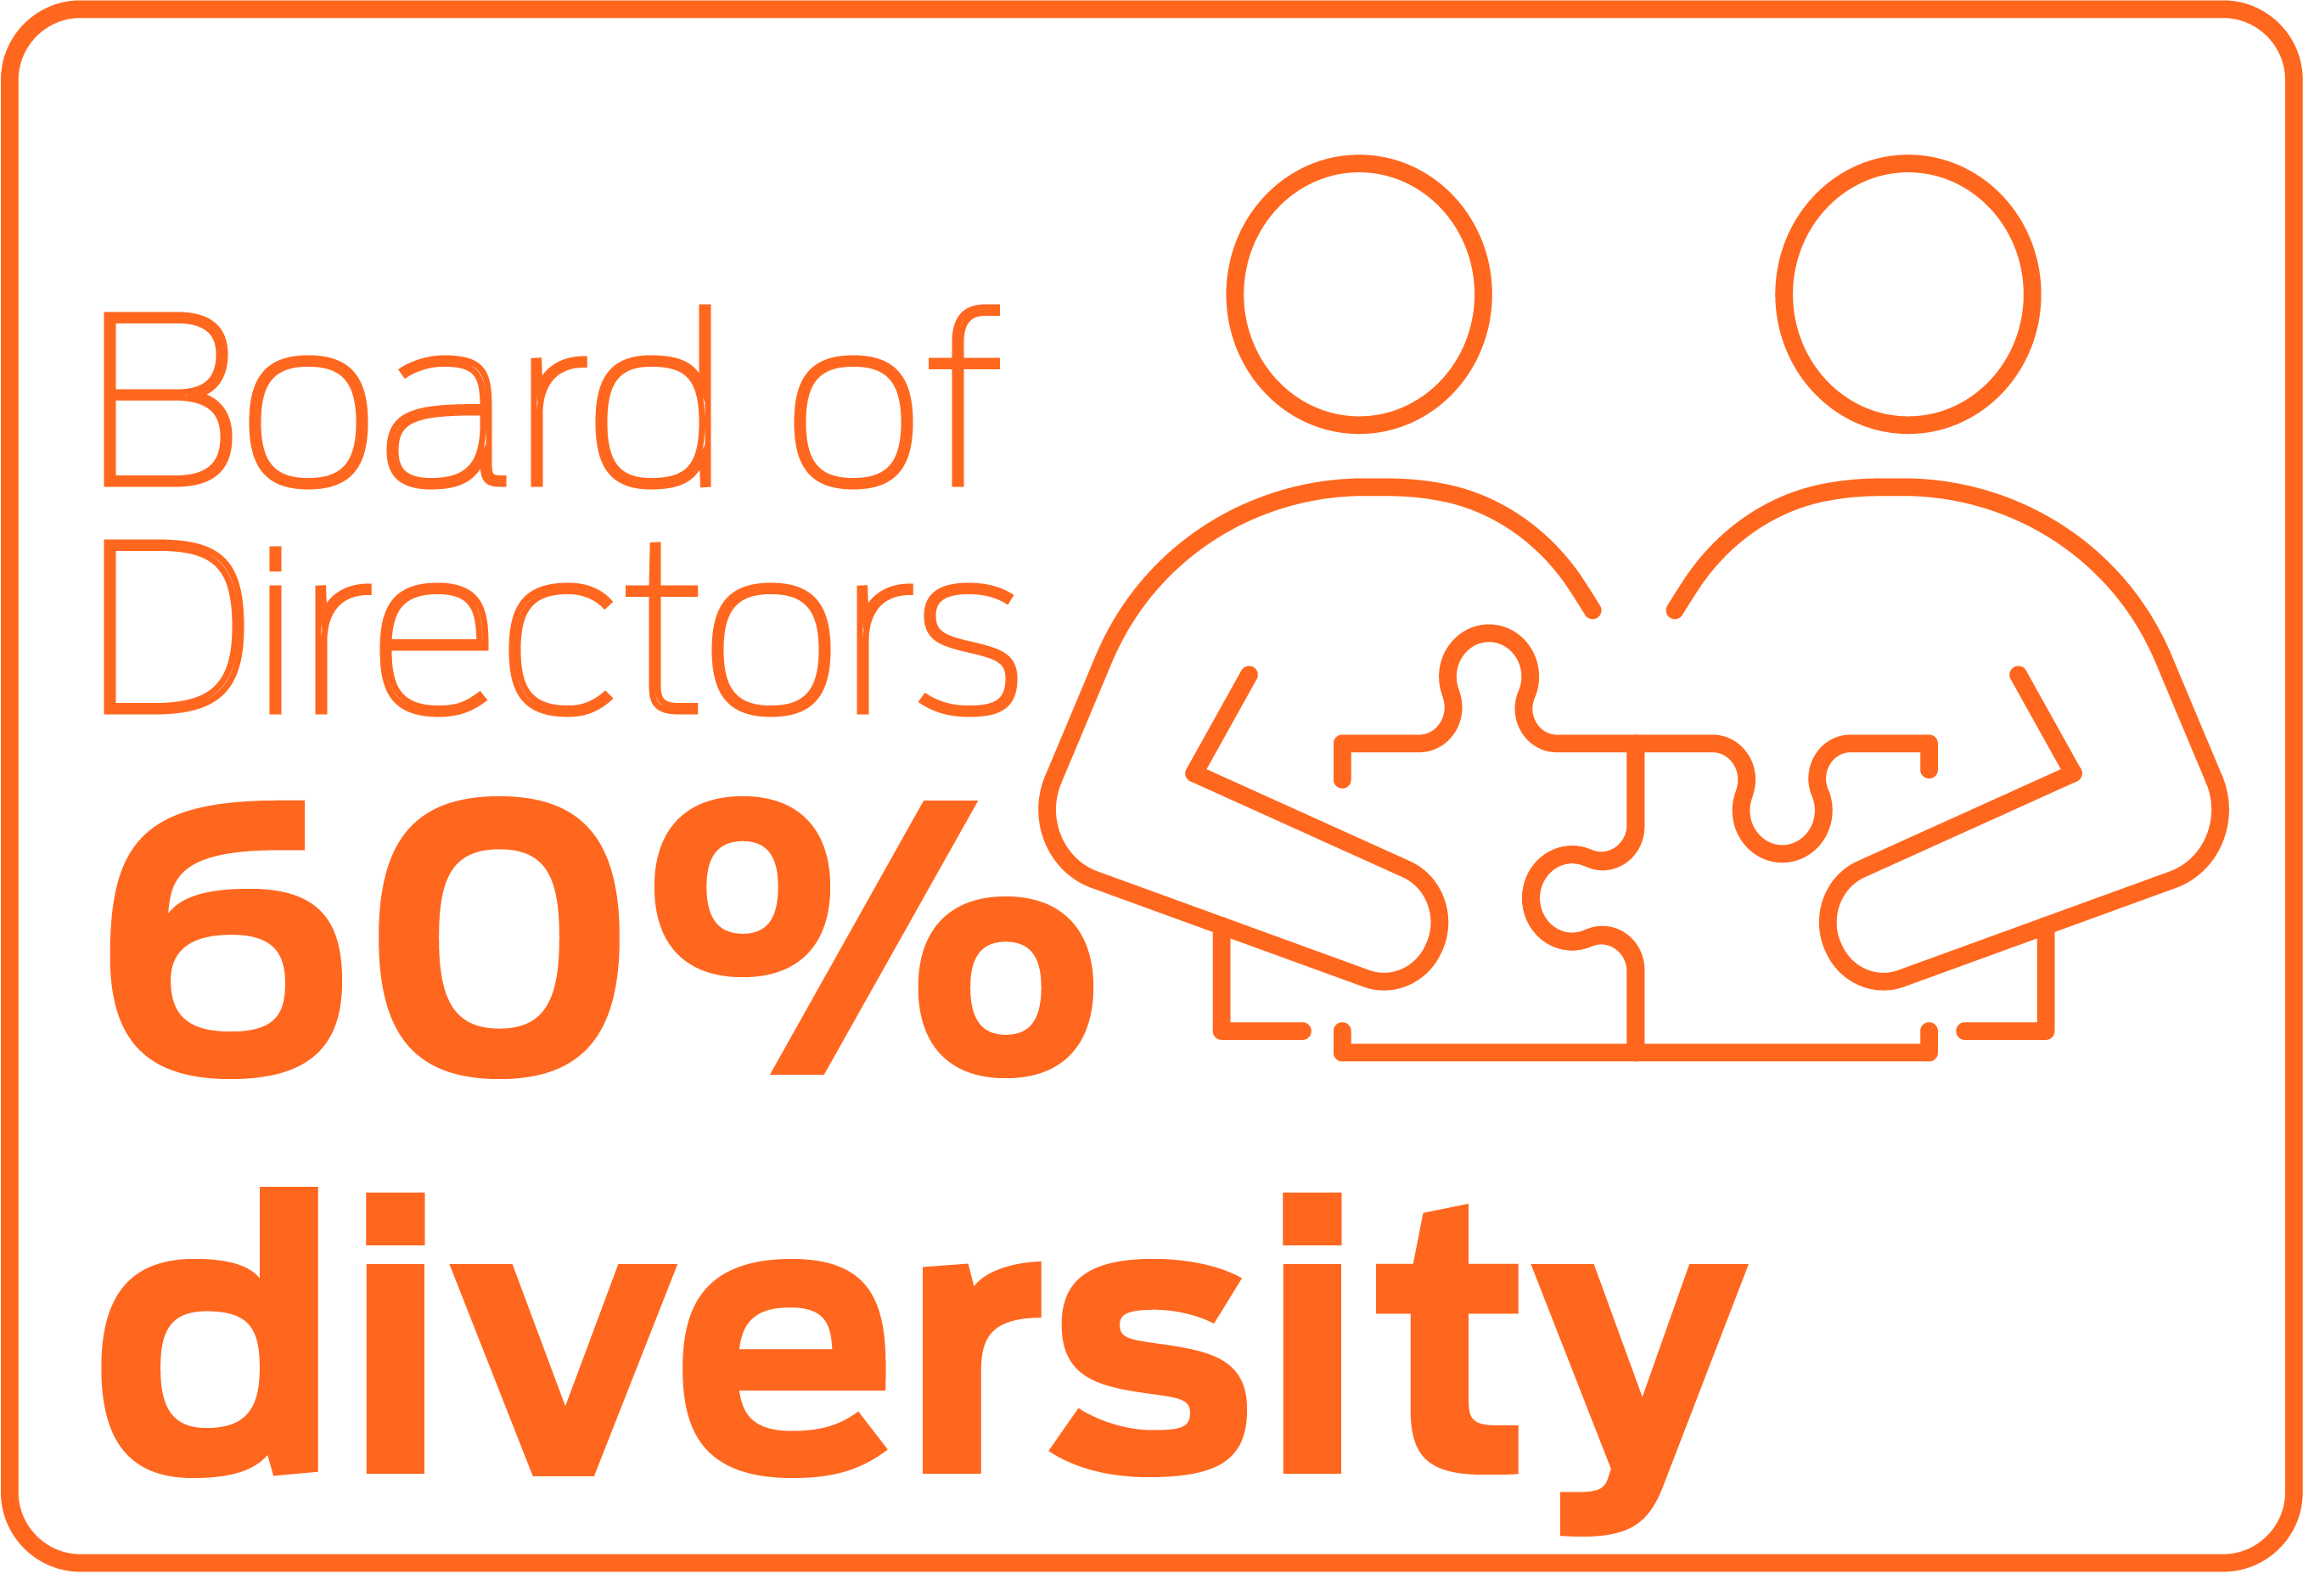 Board of directors has 56% diversity